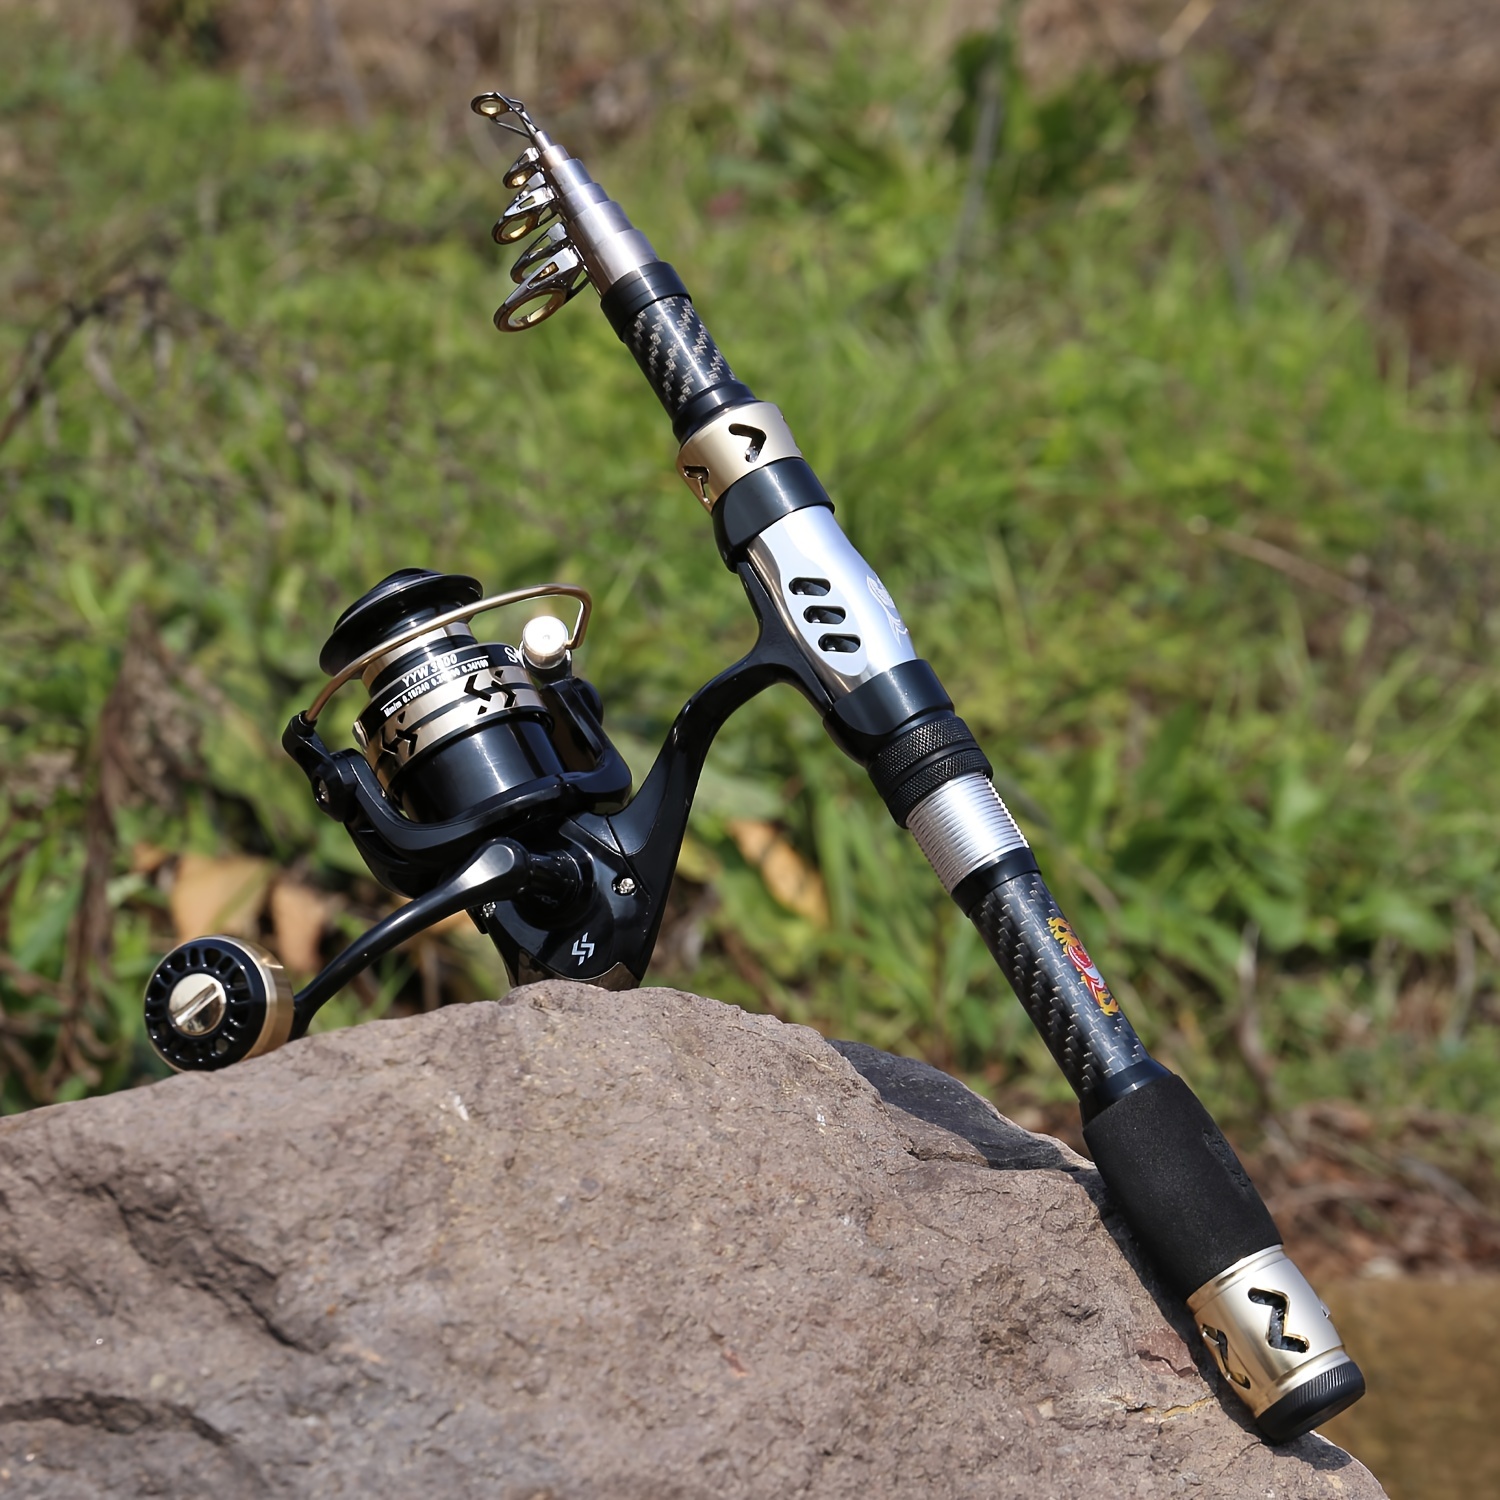 Sougayilang Fishing Pole Kit Telescopic Fishing Rod Reel - Temu